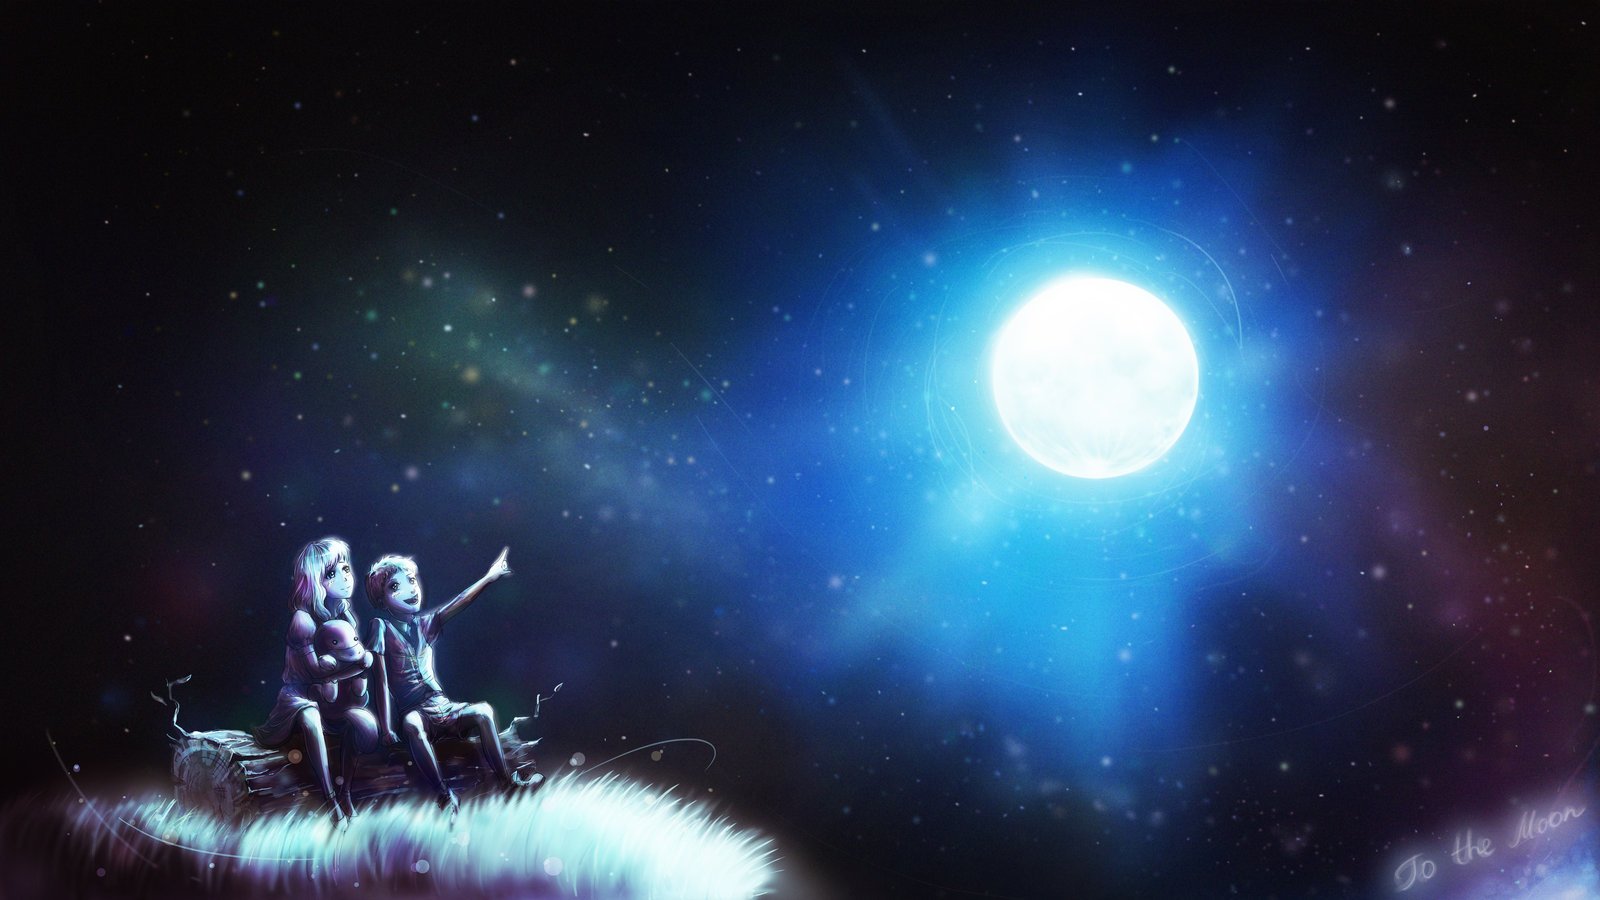 To the Moon by Ioruko on